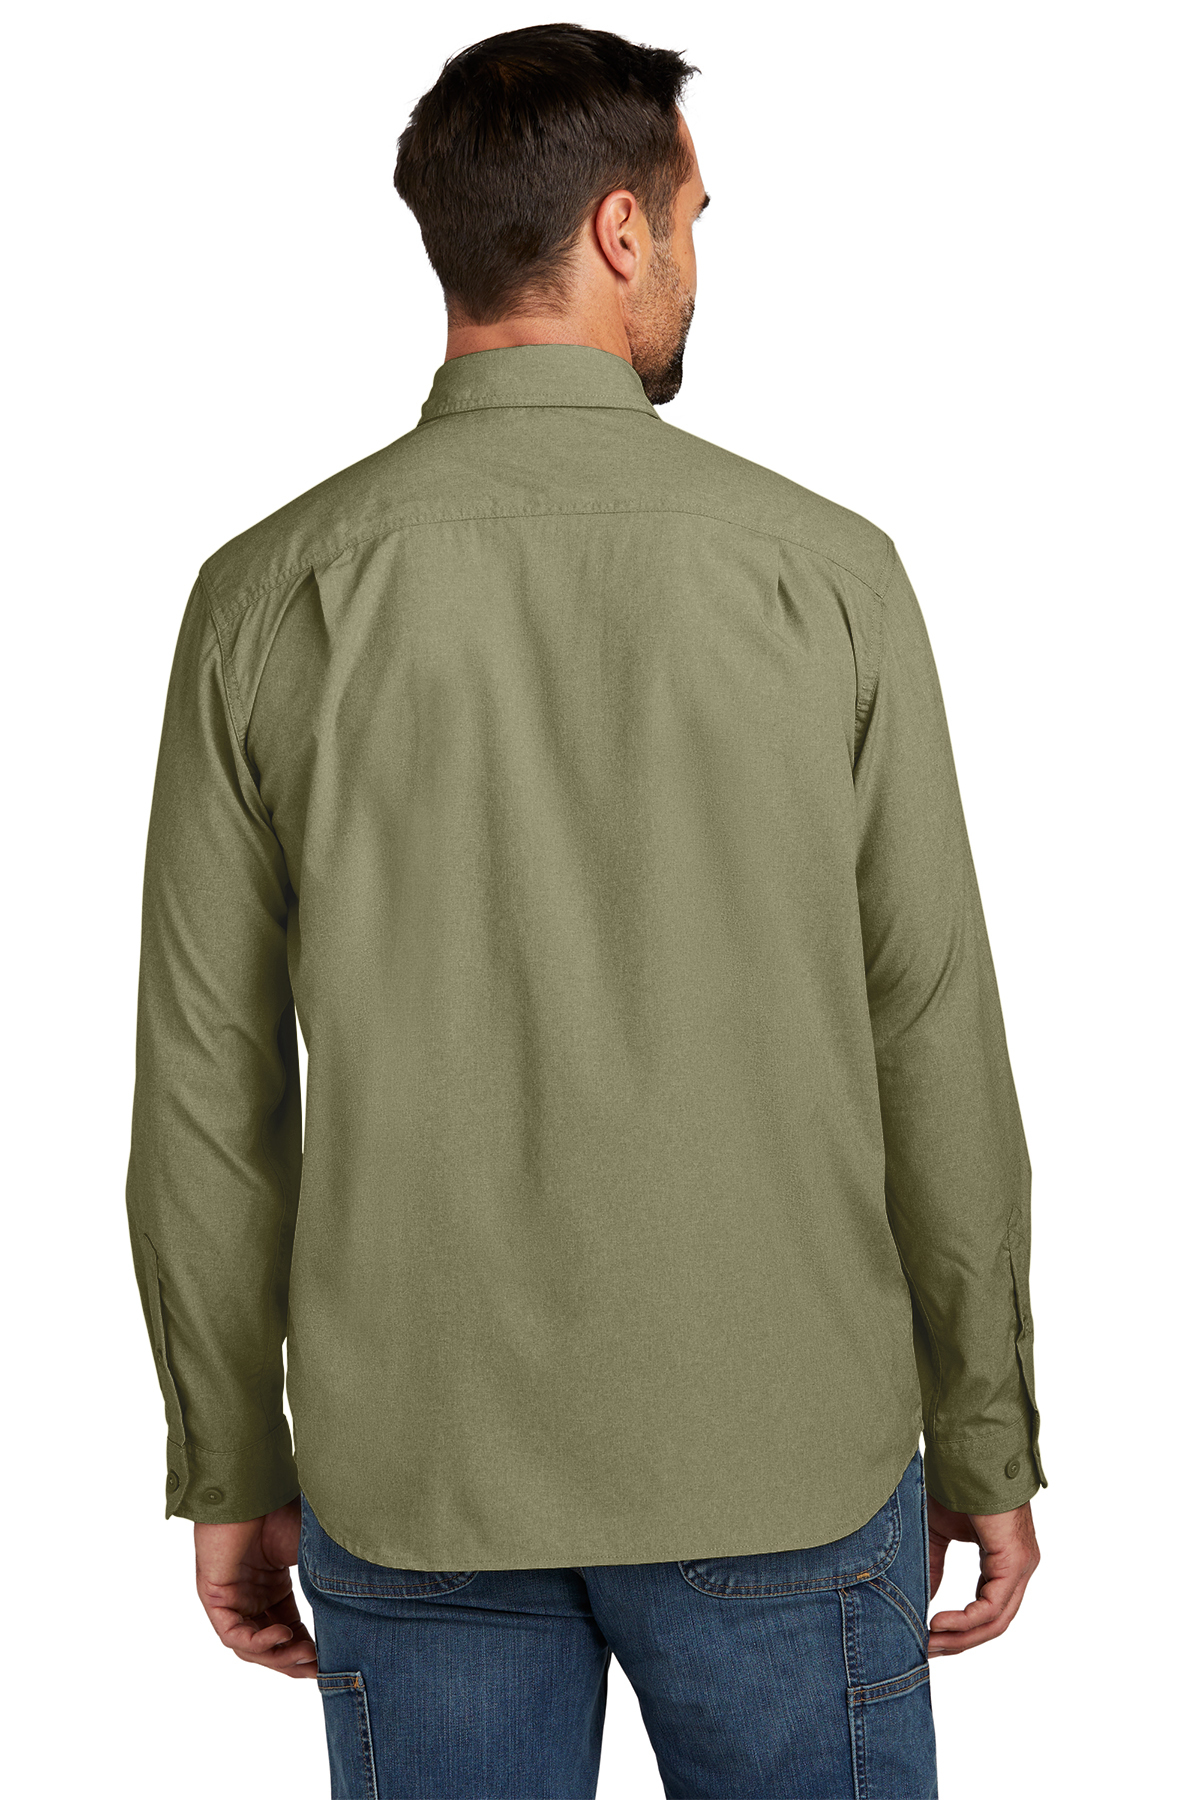 Carhartt Force Solid Long Sleeve Shirt | Product | SanMar